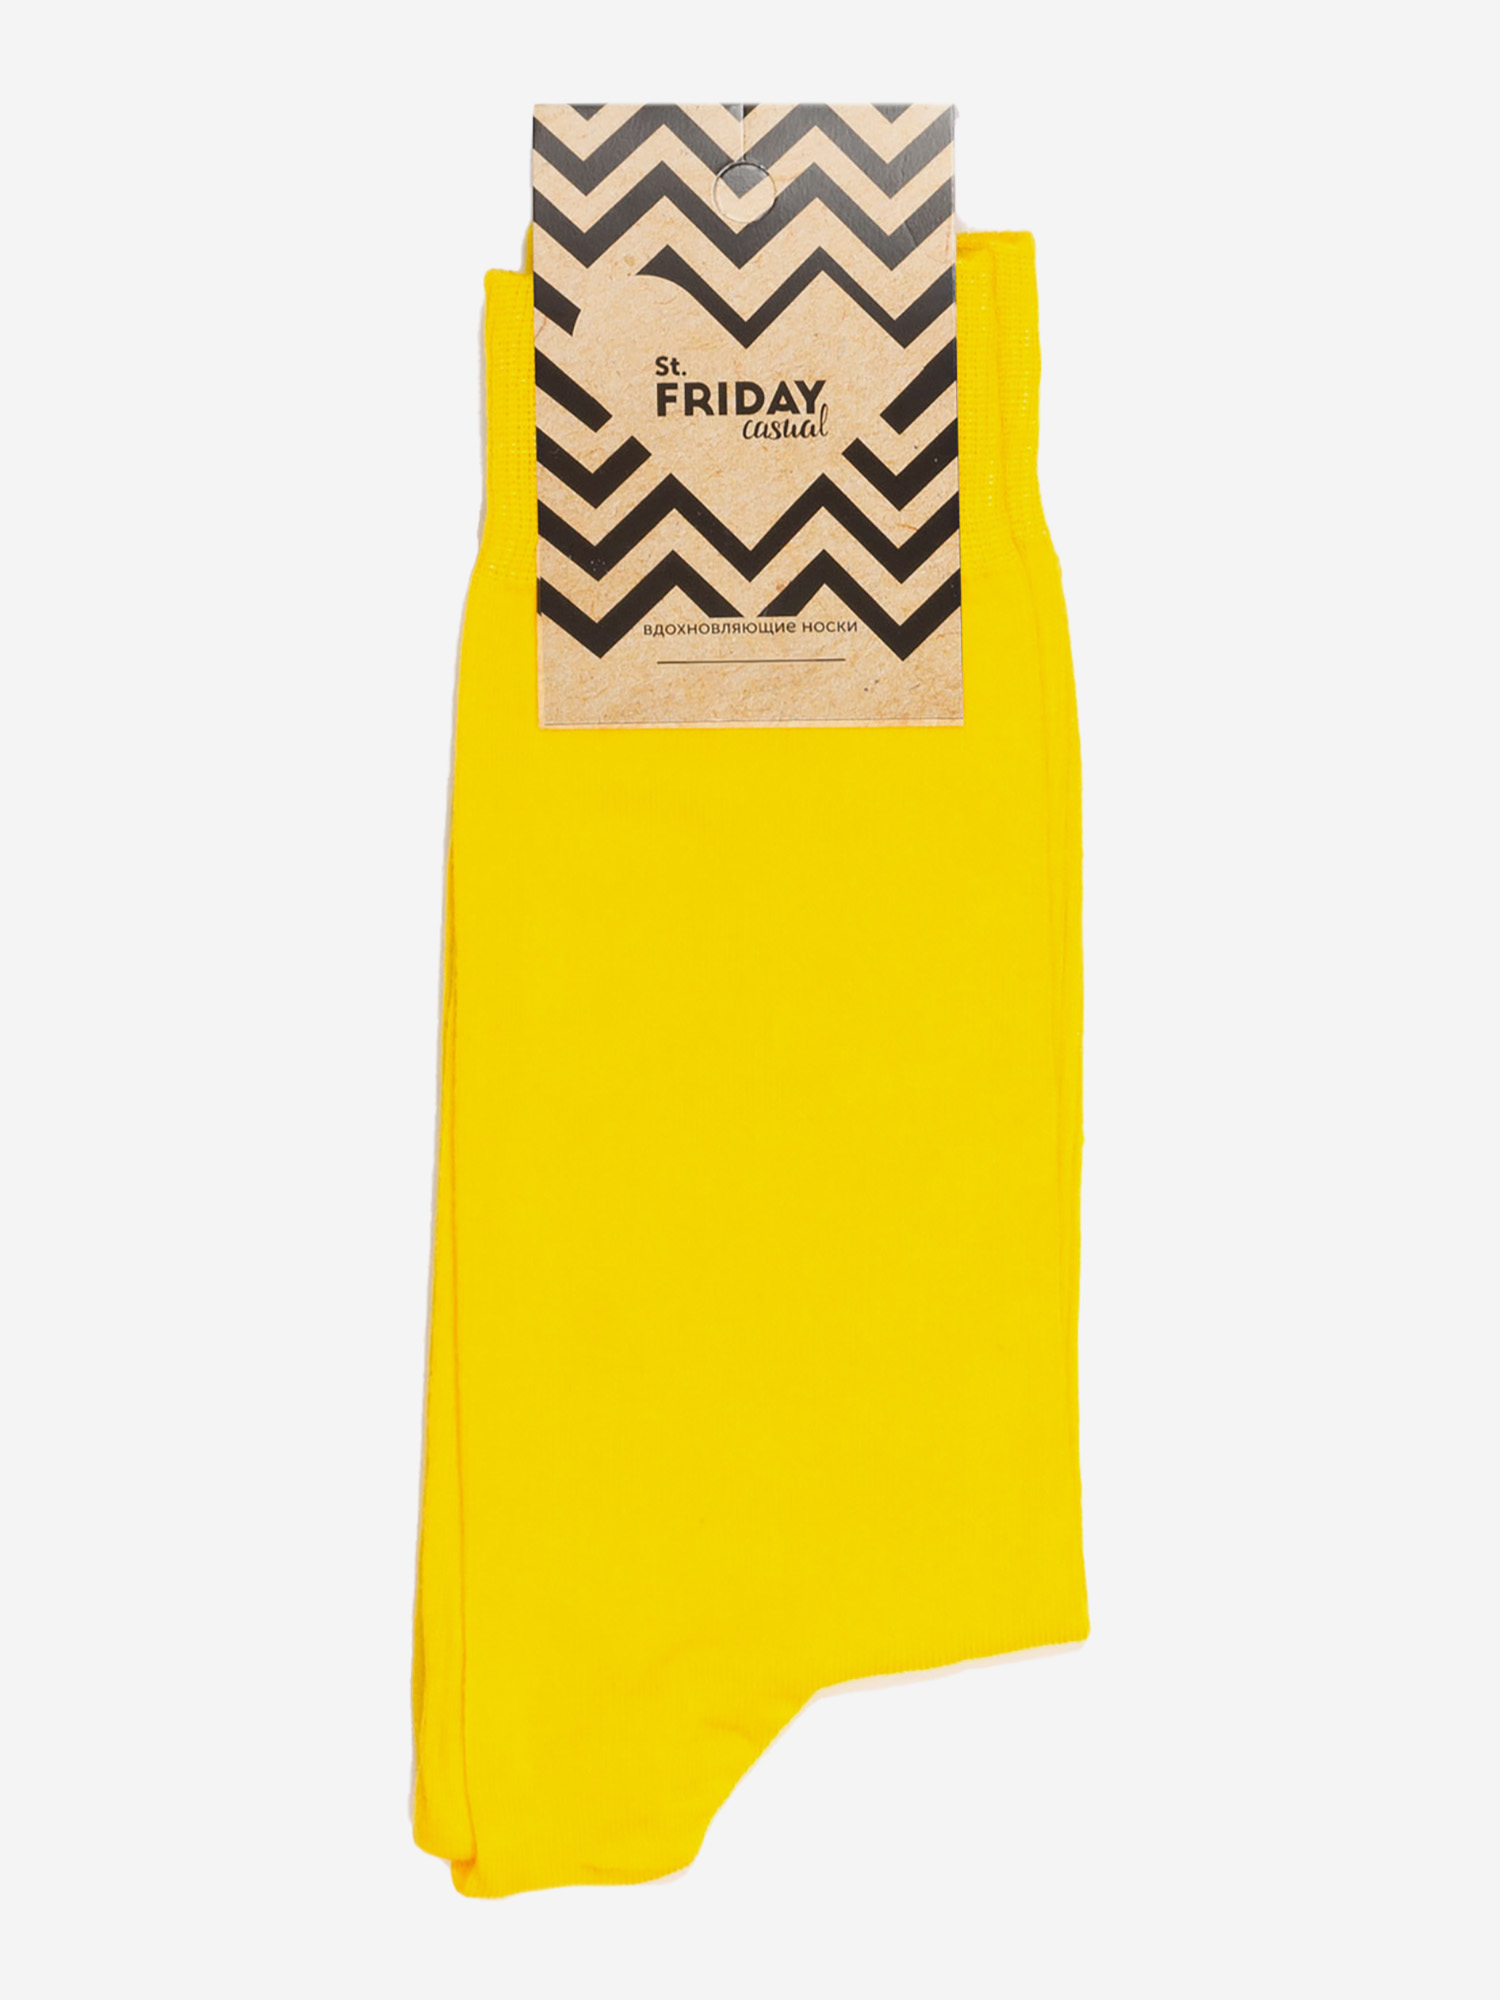 Носки однотонные St.Friday Socks - Желтые, Желтый шорты для мальчиков желтые однотонные